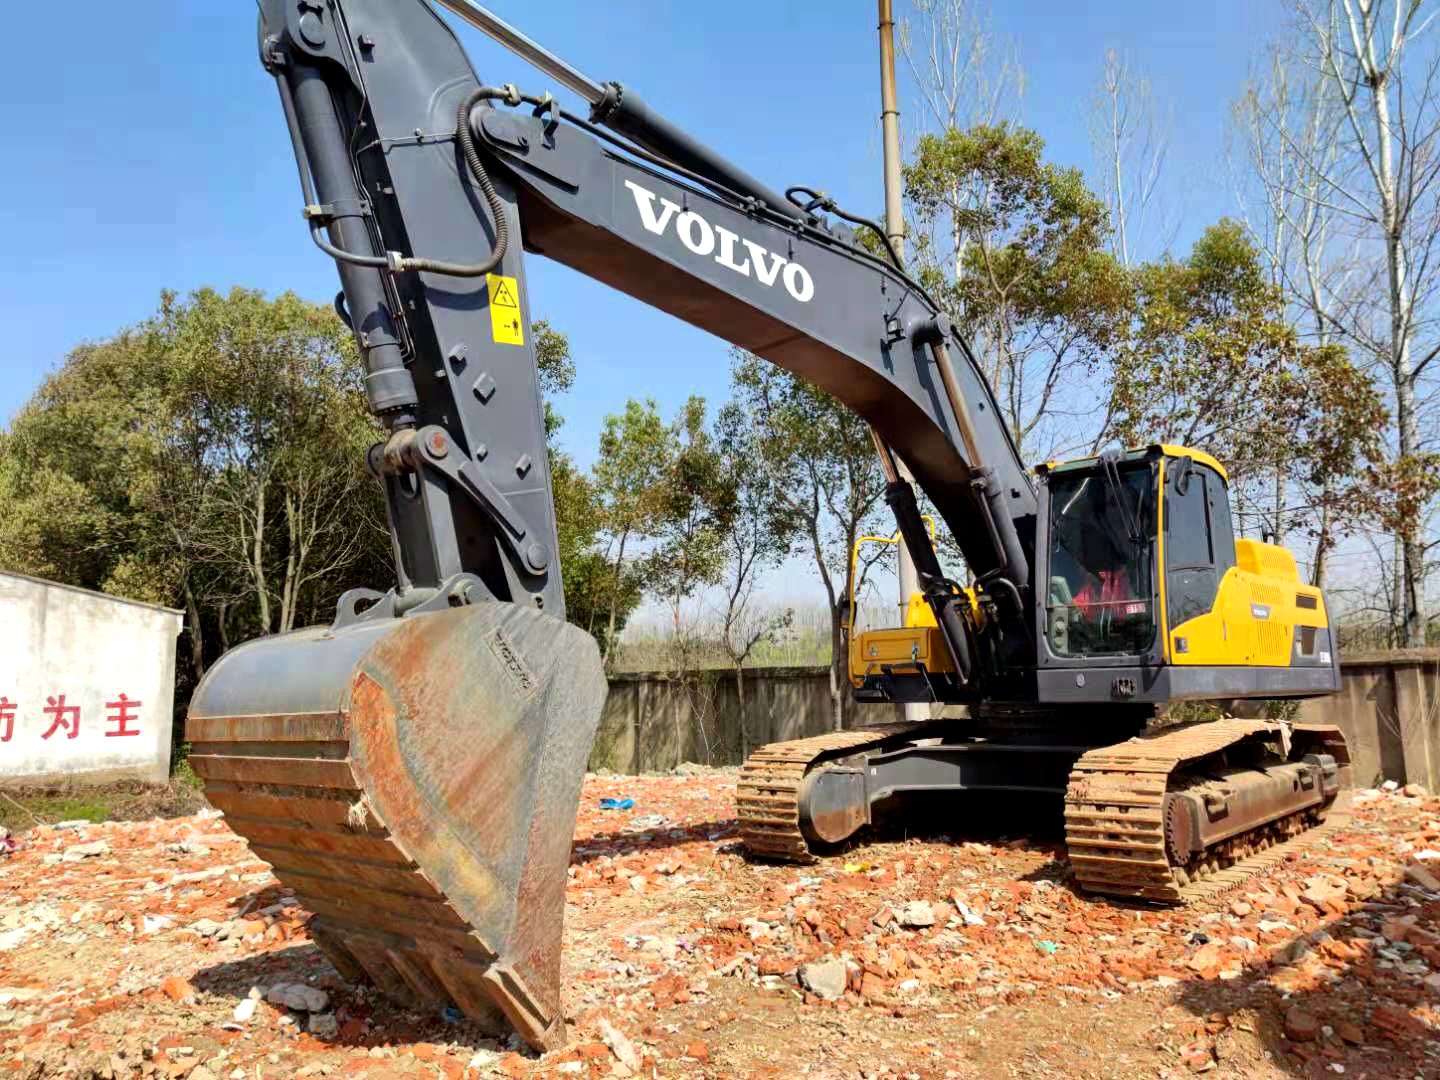 VolvoEC380D excavator